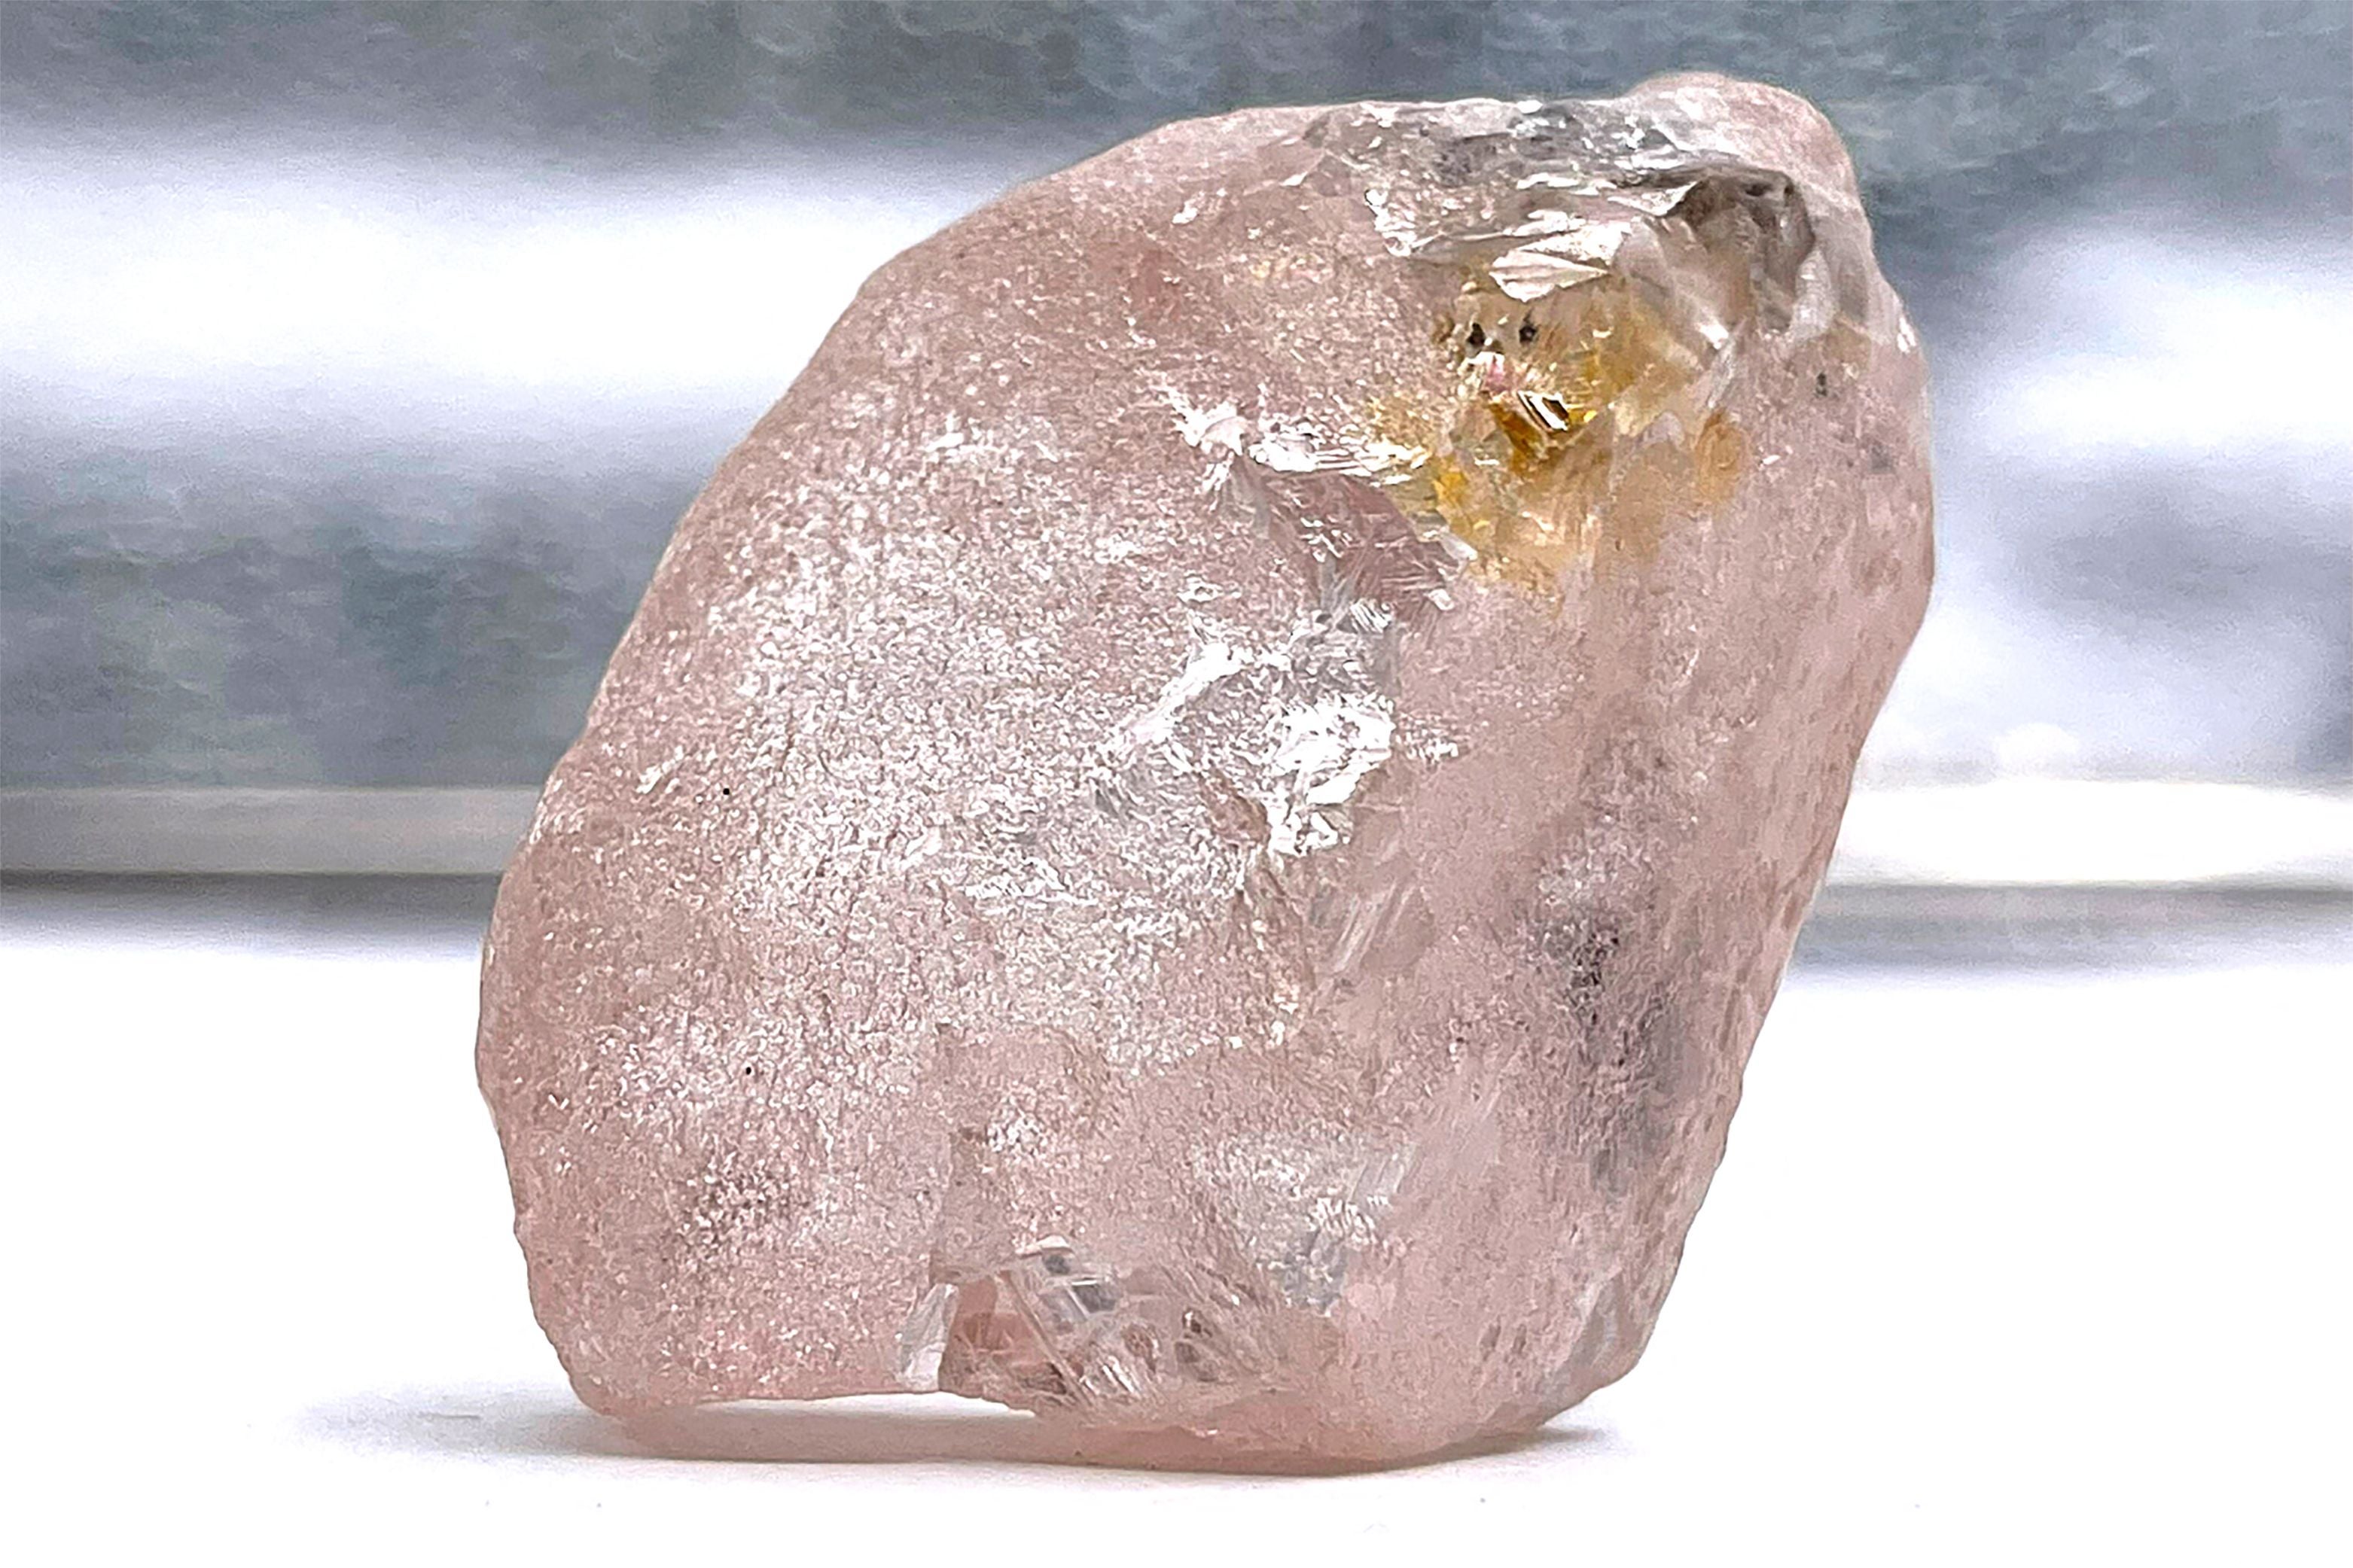 The gem was found in Angola’s diamond-rich northeast region